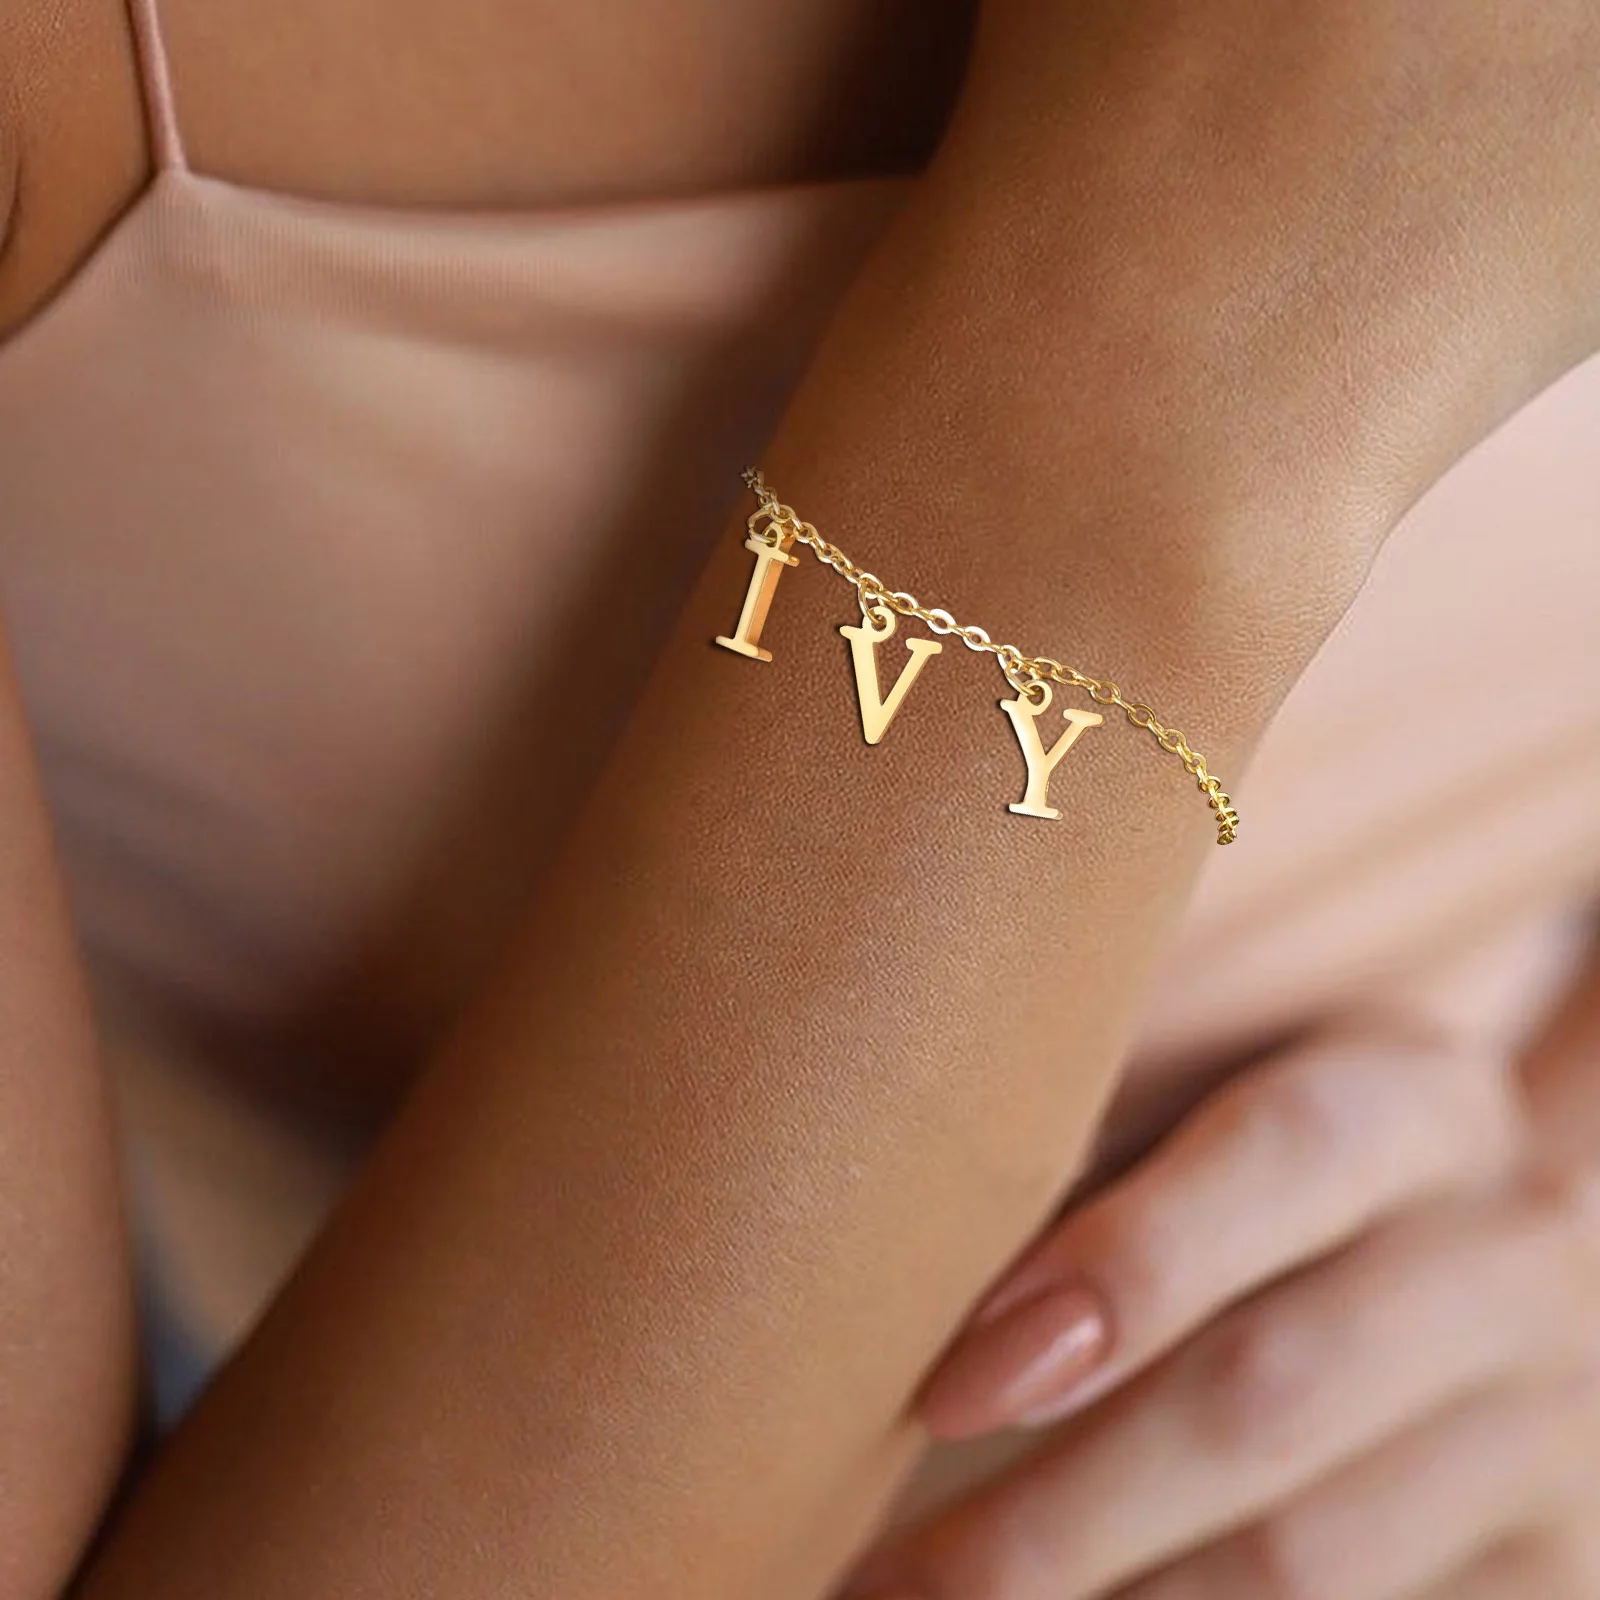 Women's Personalized Letter Charm Bracelet